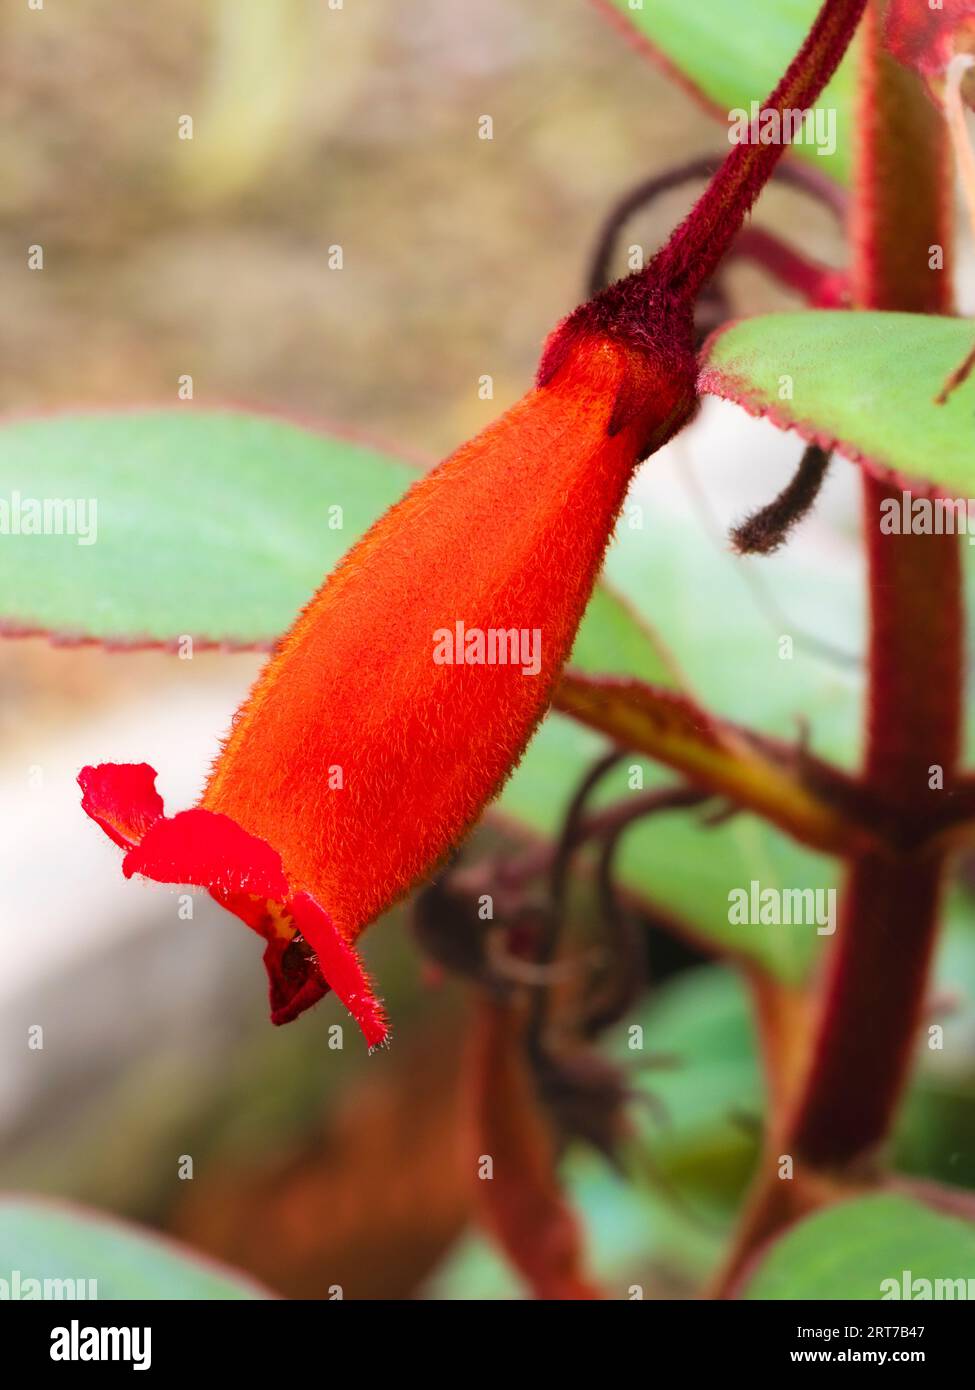 Tubular red summer flower of the sub-tropical perennial Kohleria eriantha Stock Photo